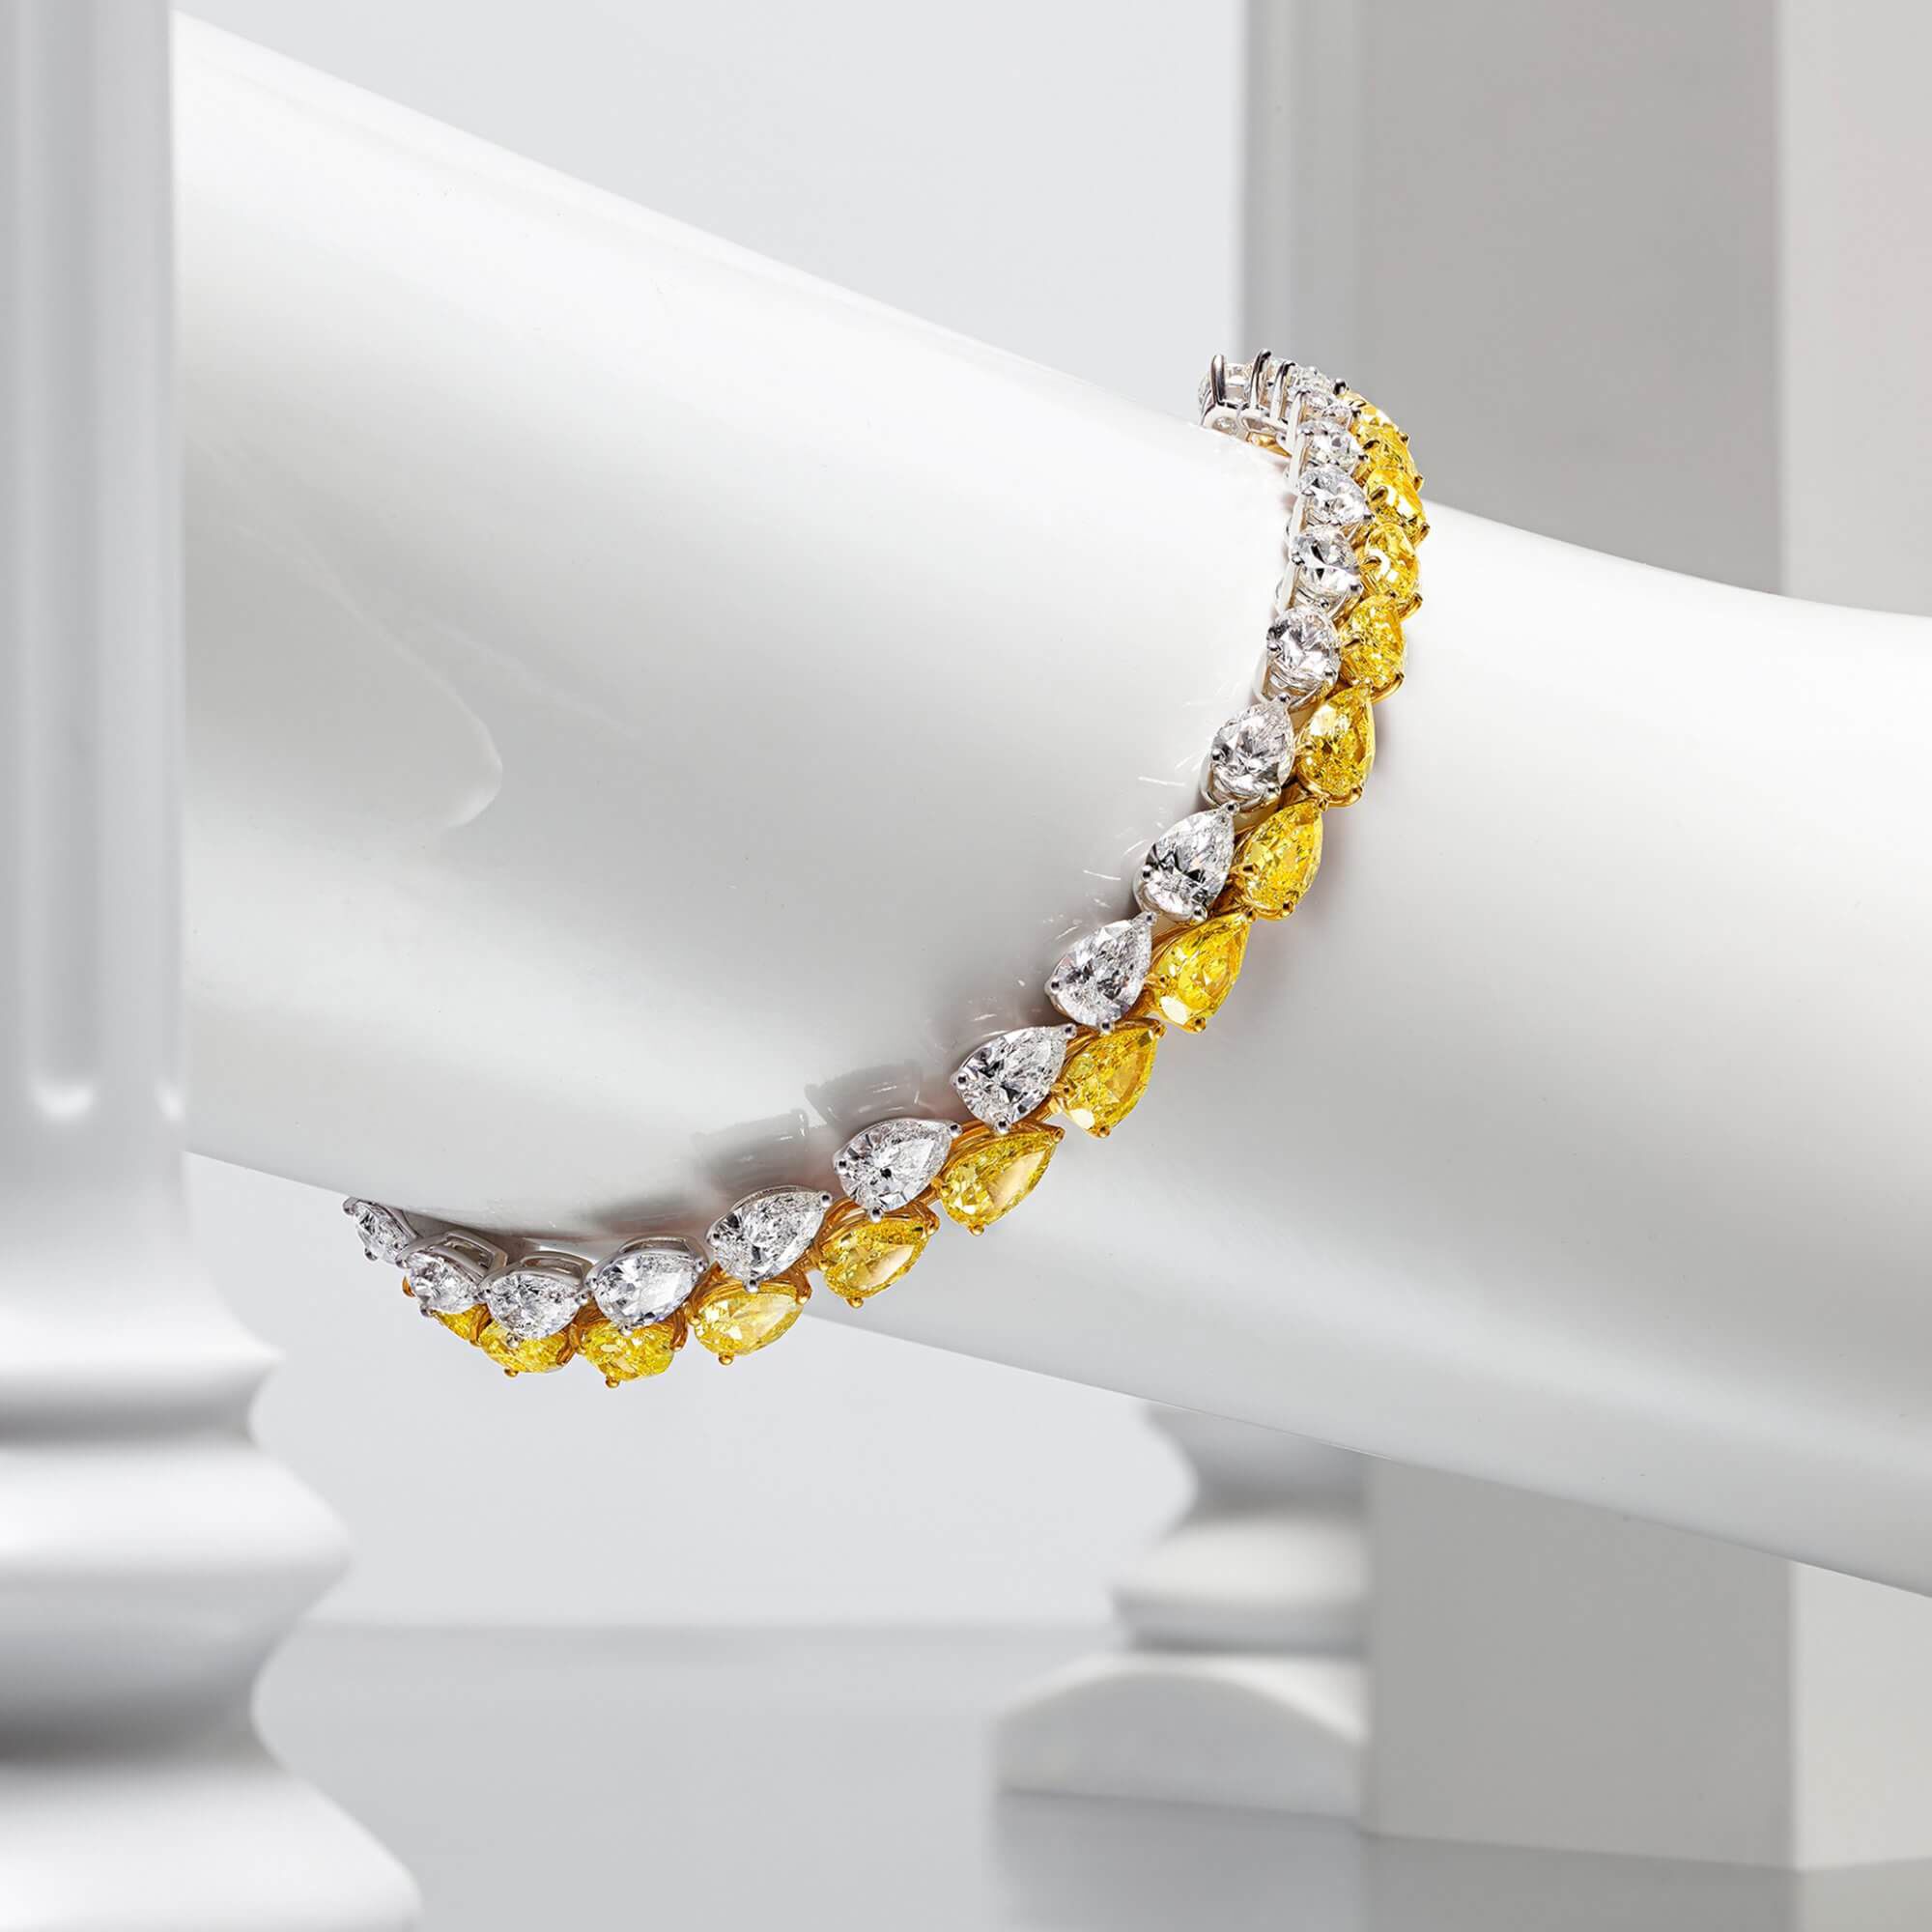  Graff Yellow And White Pear Shape Diamond High Jewellery Bracelet inside a Gallery